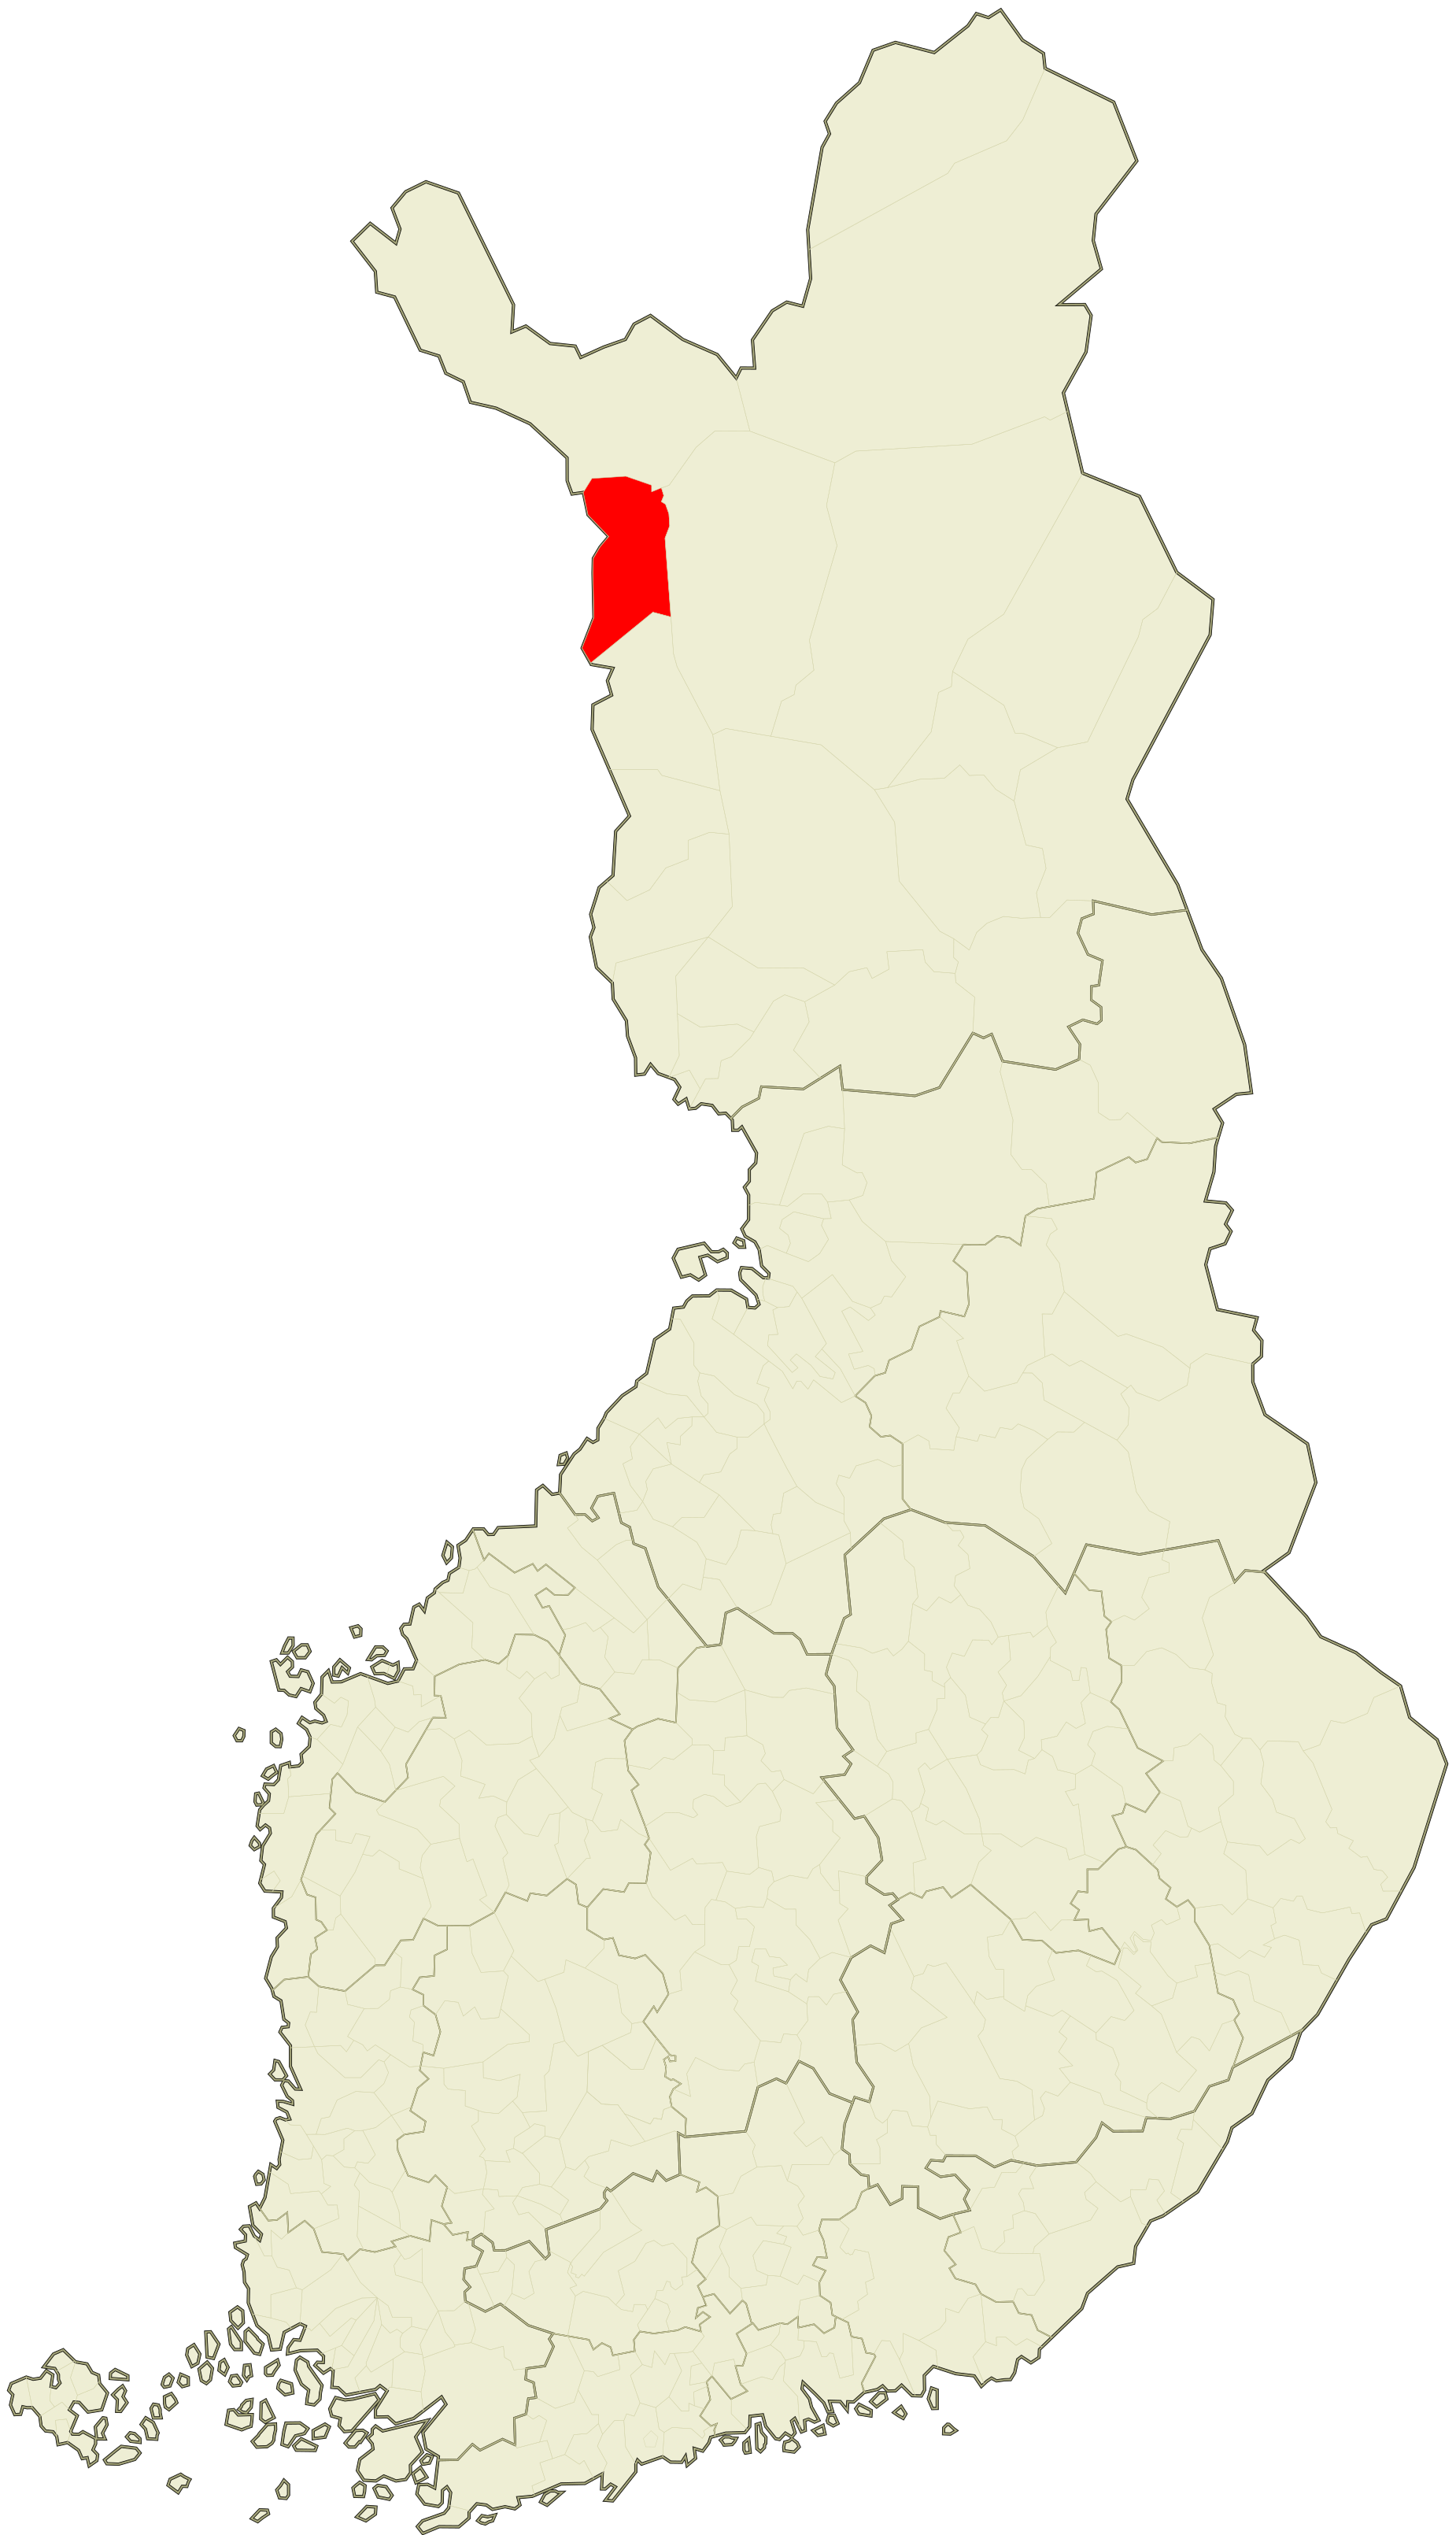 muonio kartta File:Muonio.sijainti.suomessa.2010.svg   Wikimedia Commons